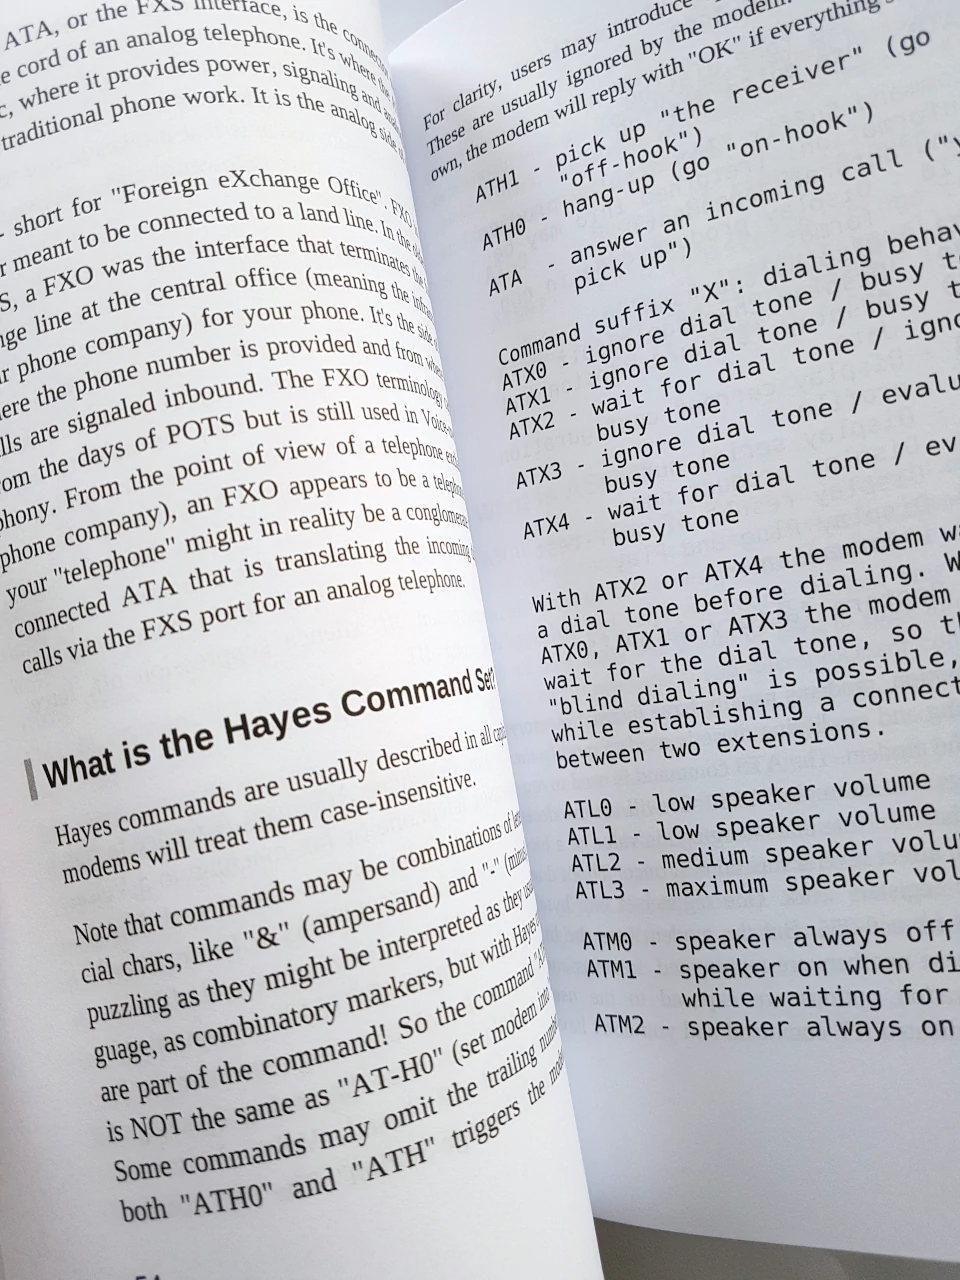 Micropolis BBS Primer, inside the book